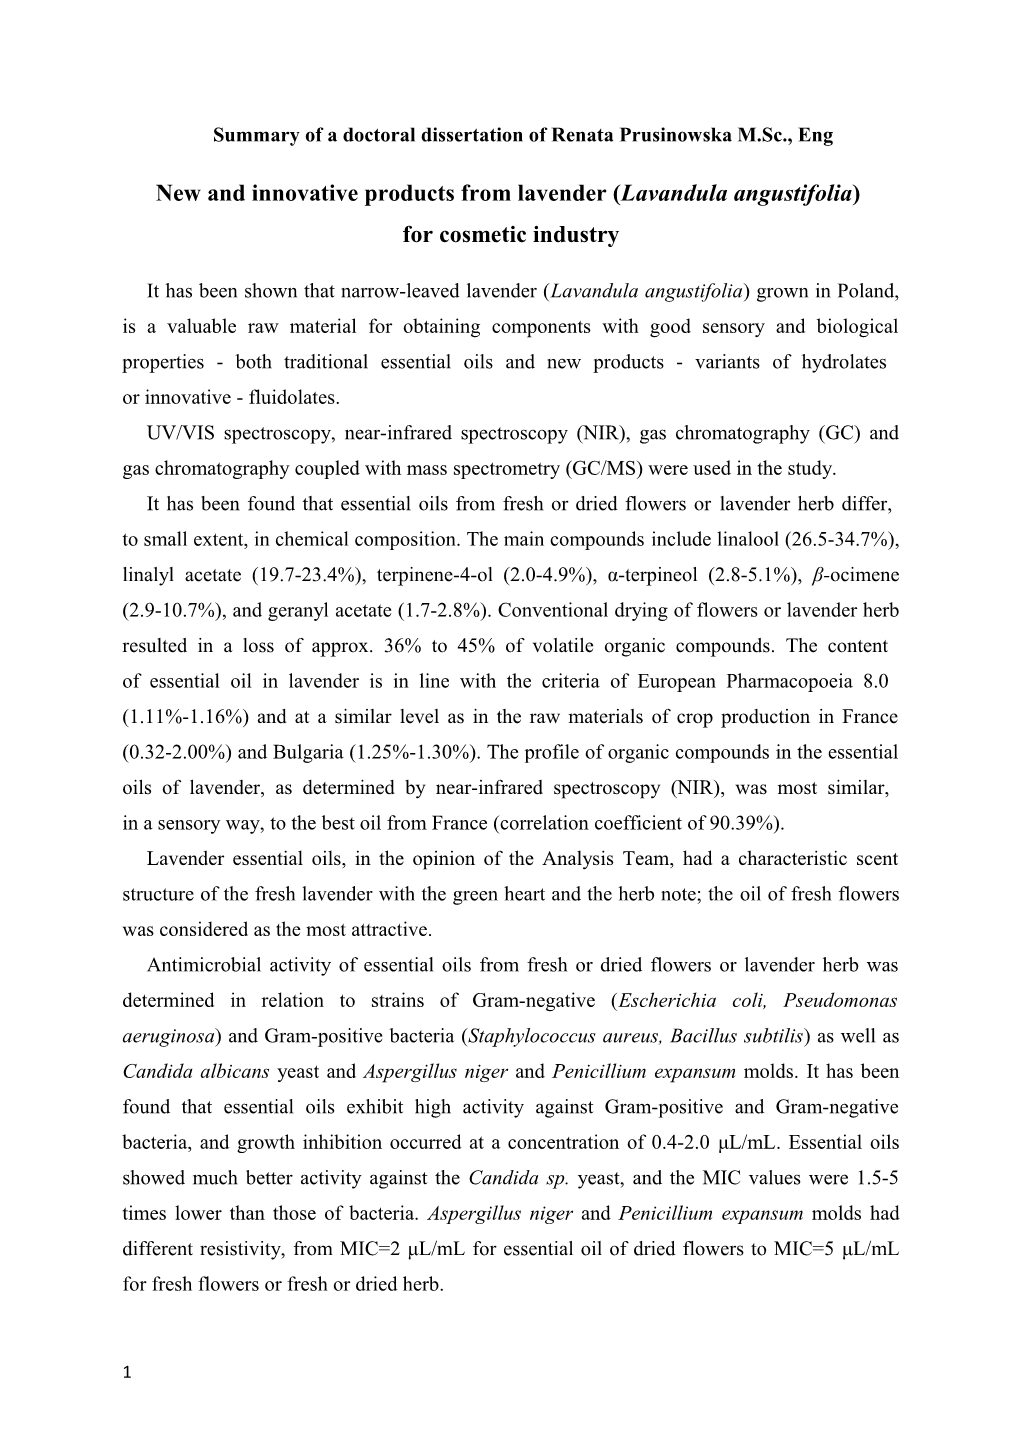 Summary of a Doctoral Dissertation of Renata Prusinowska M.Sc., Eng